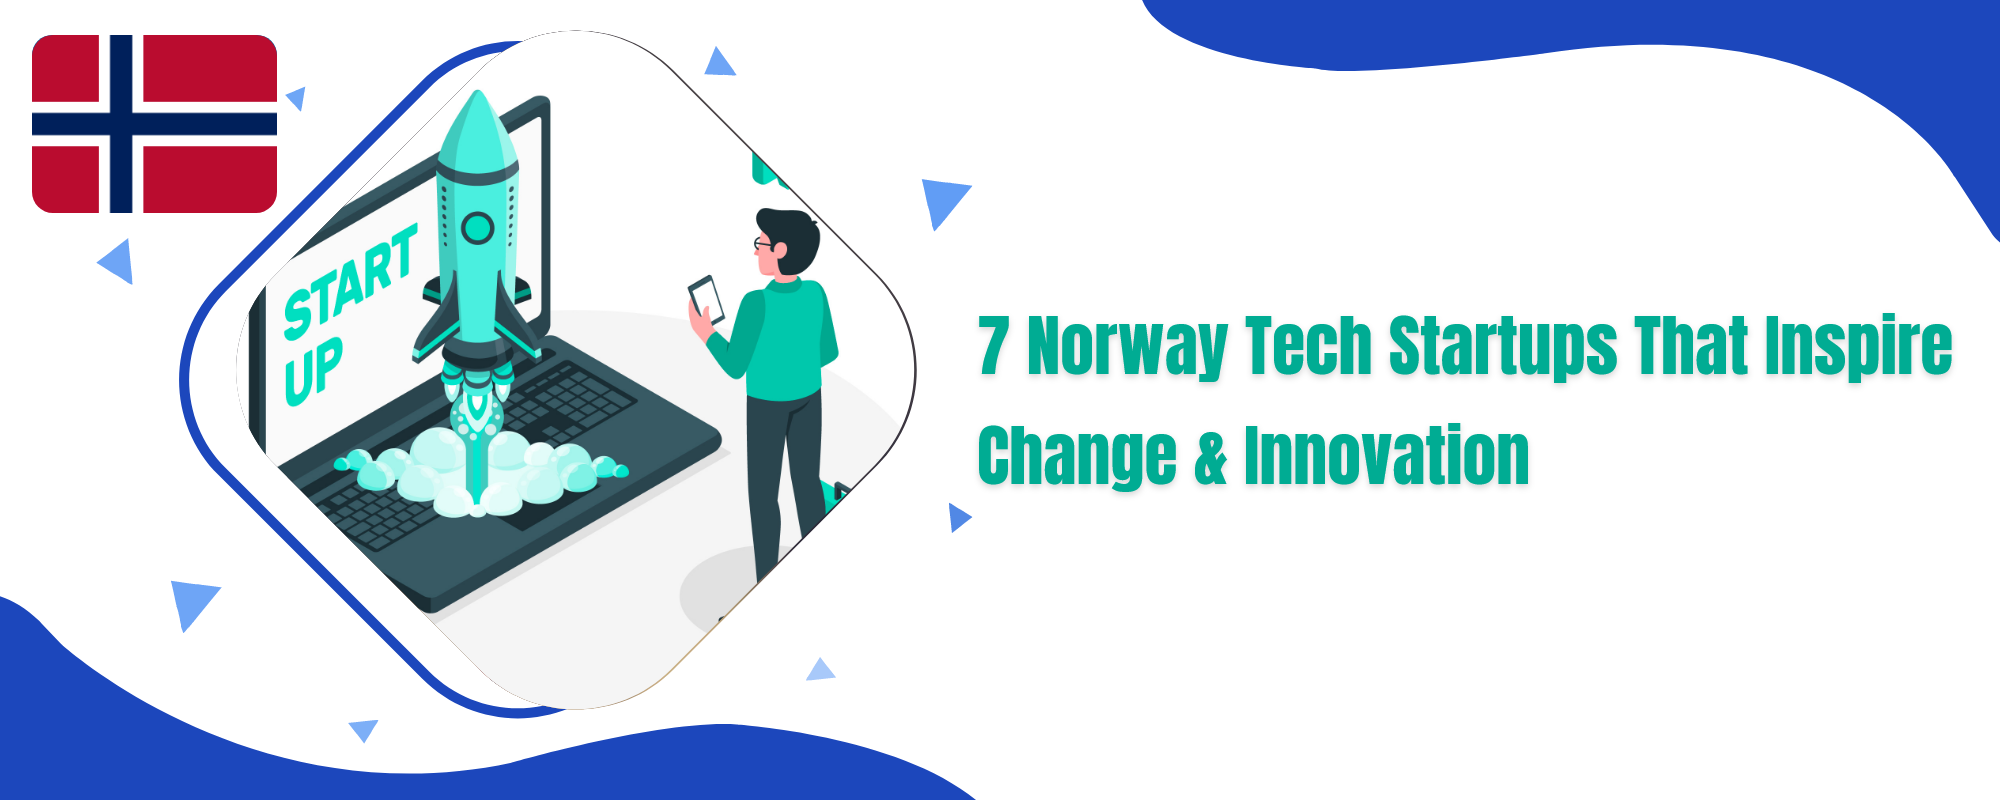 Norway tech startups